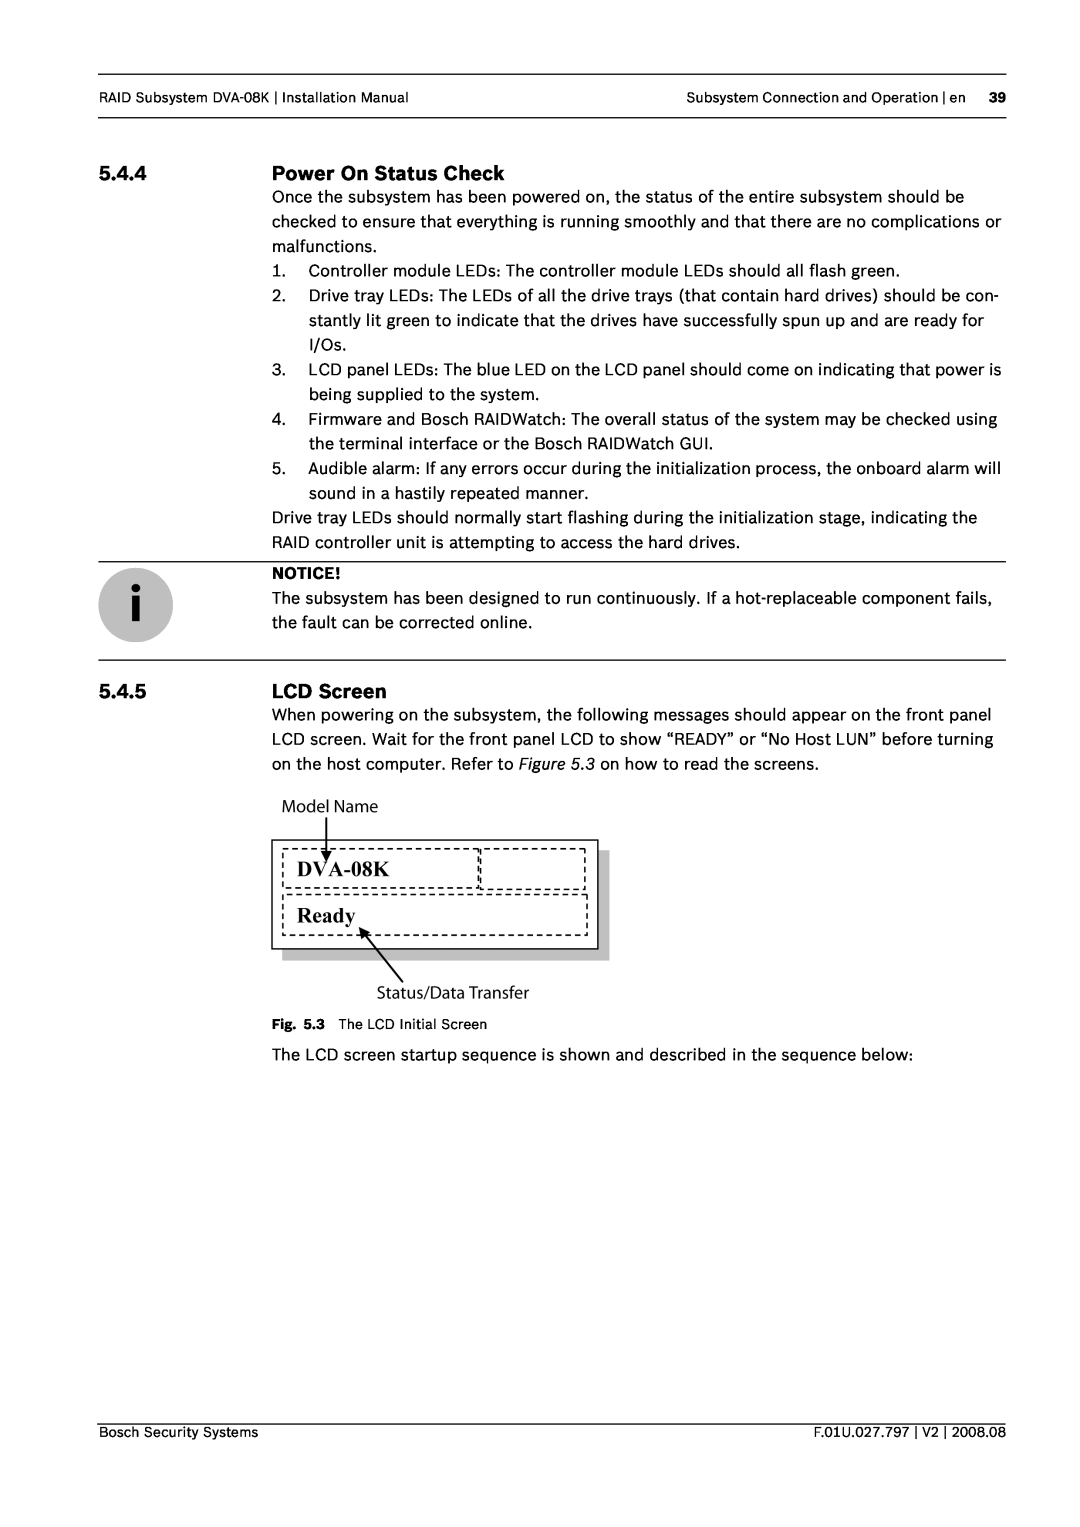 Bosch Appliances DVA-08K manual 5.4.4, Power On Status Check, 5.4.5LCD Screen 